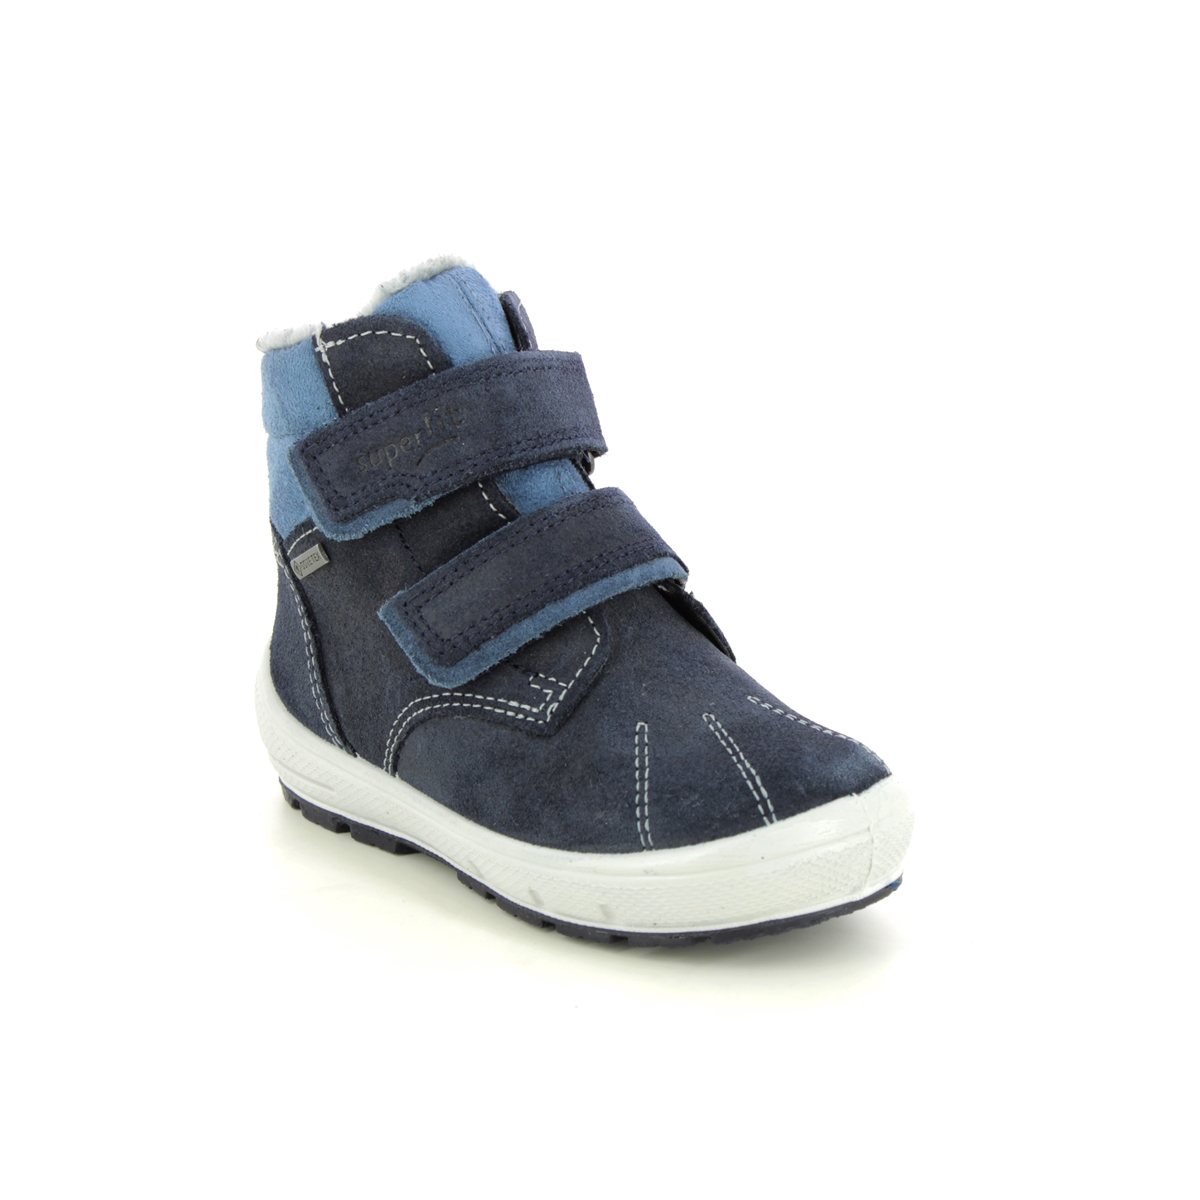 Superfit Groovy Gtx Navy Light Blue Kids Toddler Boys Boots 1006317-8000 In Size 26 In Plain Navy Light Blue